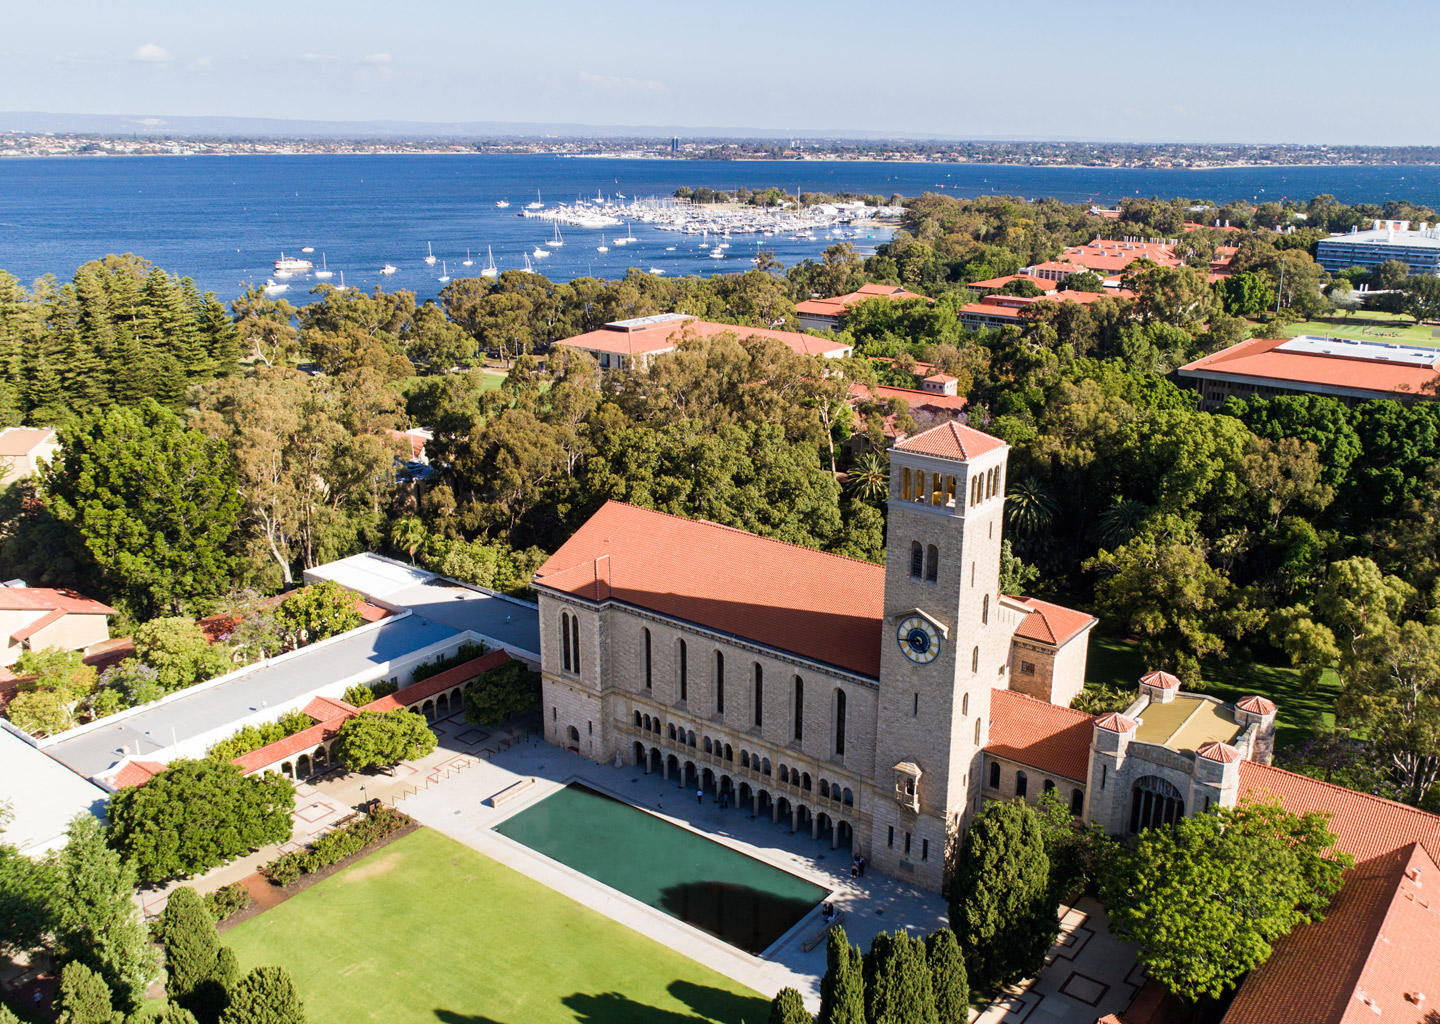 The University of Western Australia (UWA) Australia Rankings